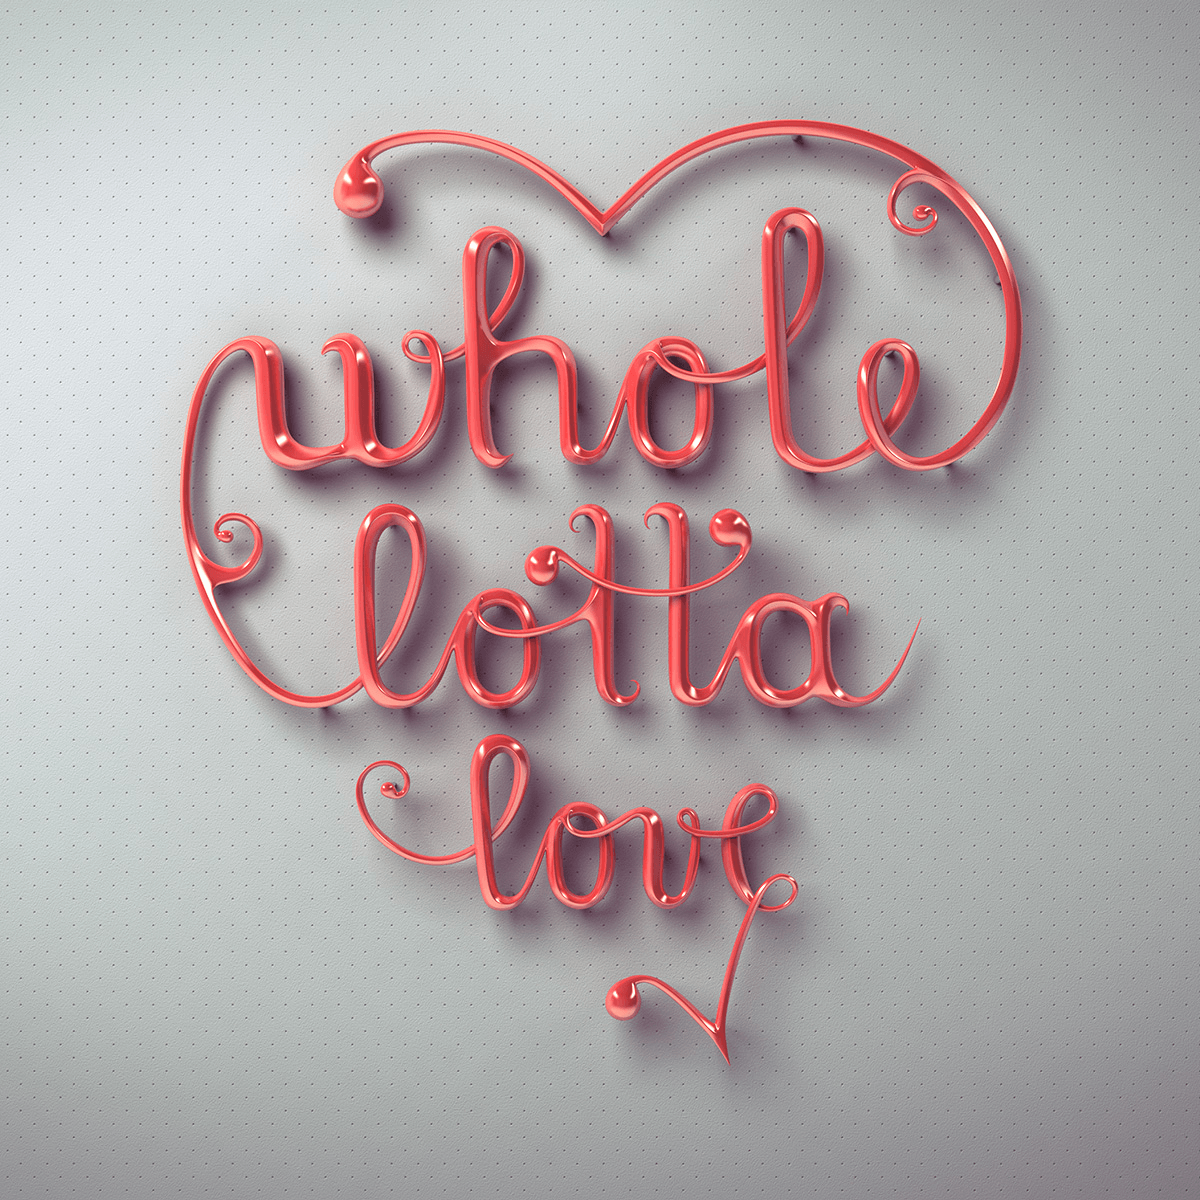 Whole lotta love ❤